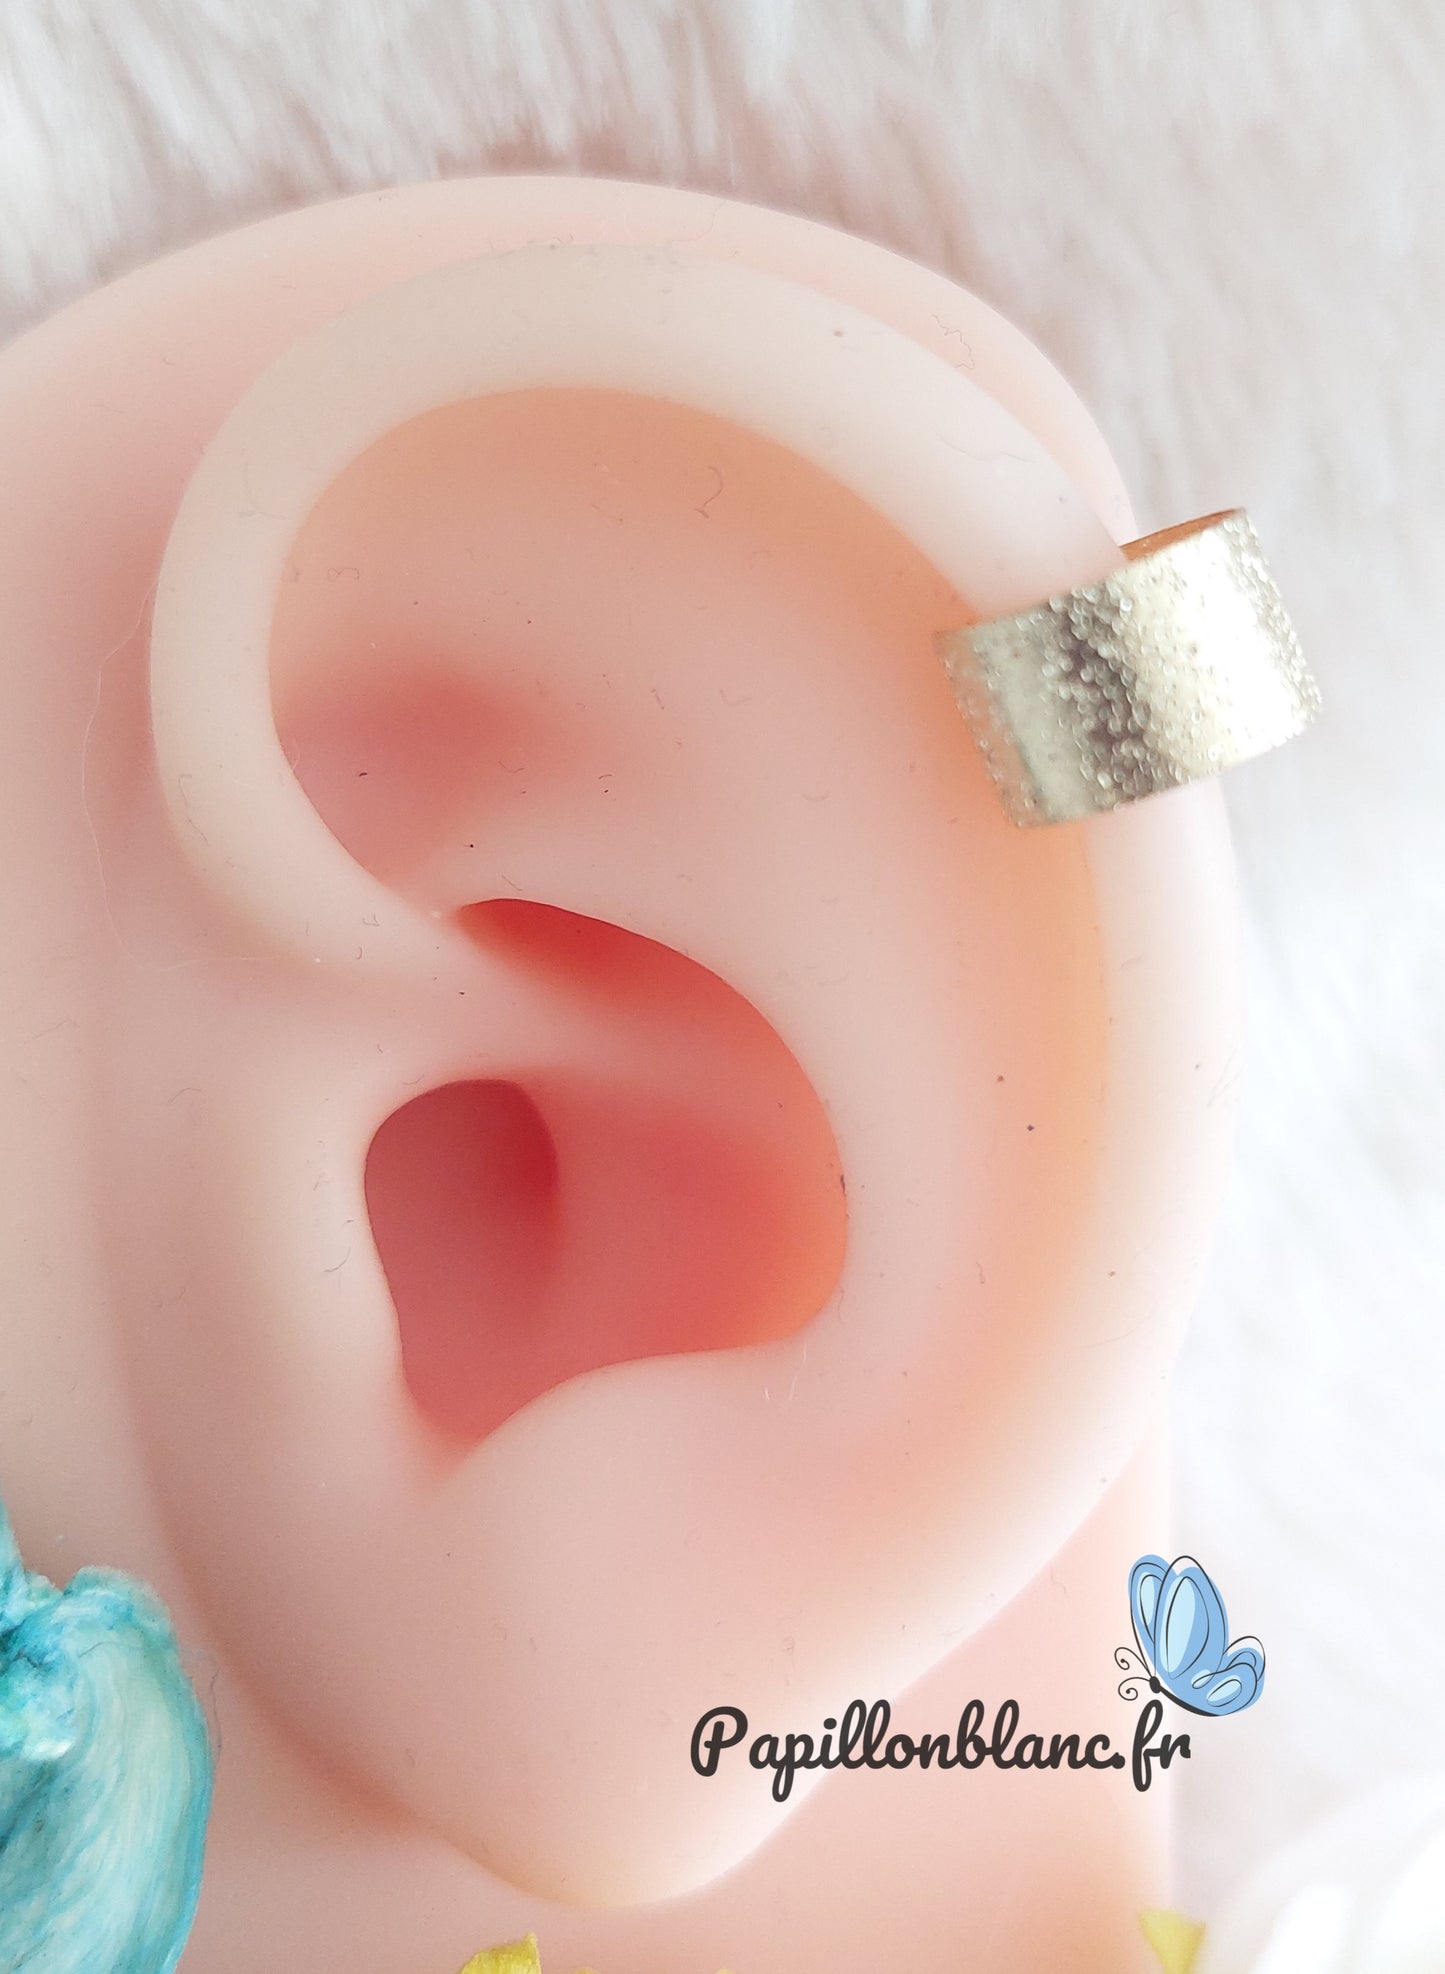 Bijou d'oreilles sans trou ( Ear cuff )